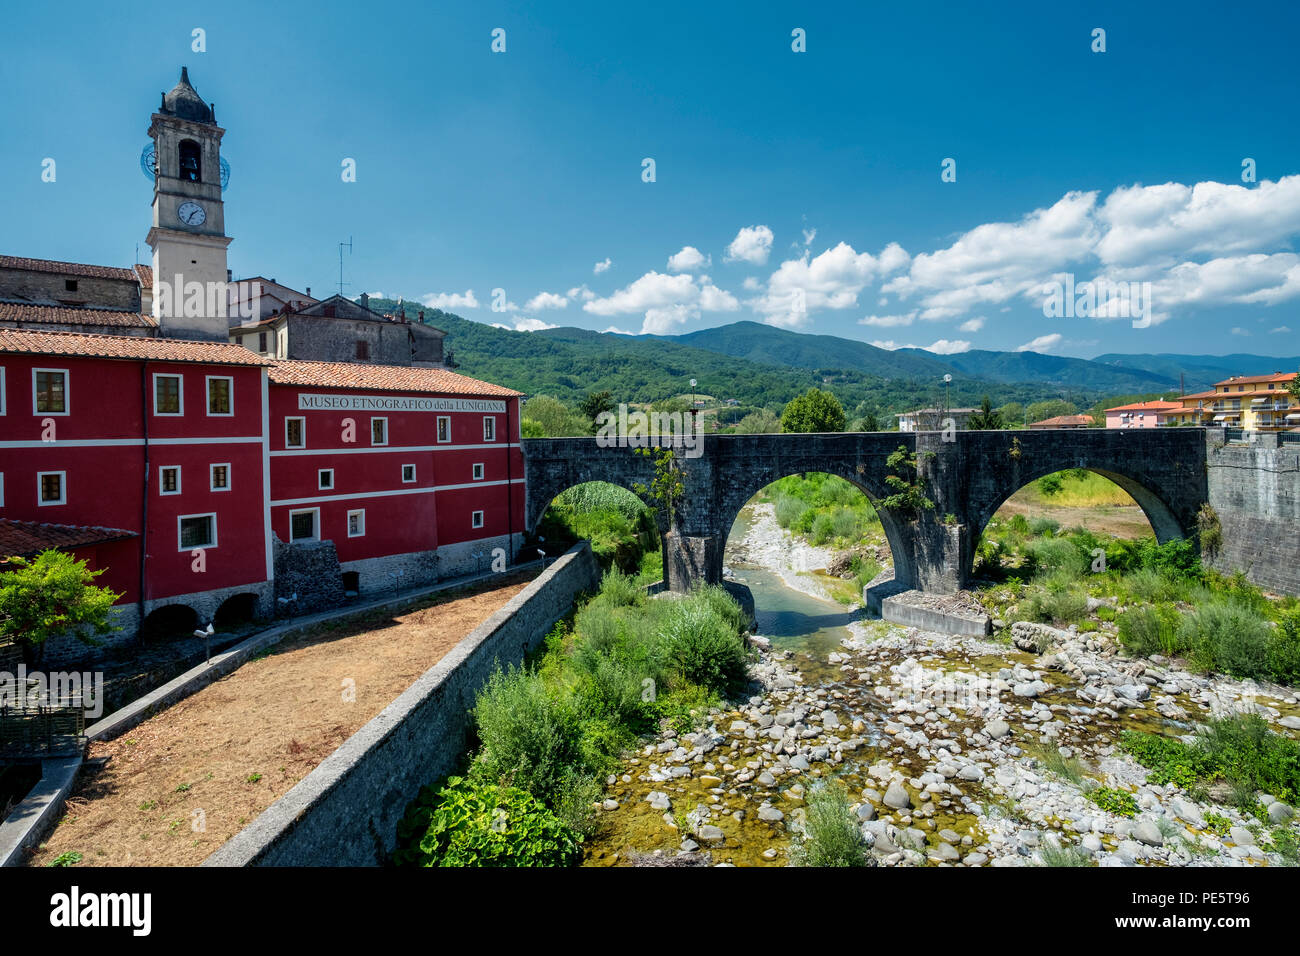 Villafranca in Lunigiana, Massa Carrara, Tuscany, Italy, hisstoric bridge Stock Photo